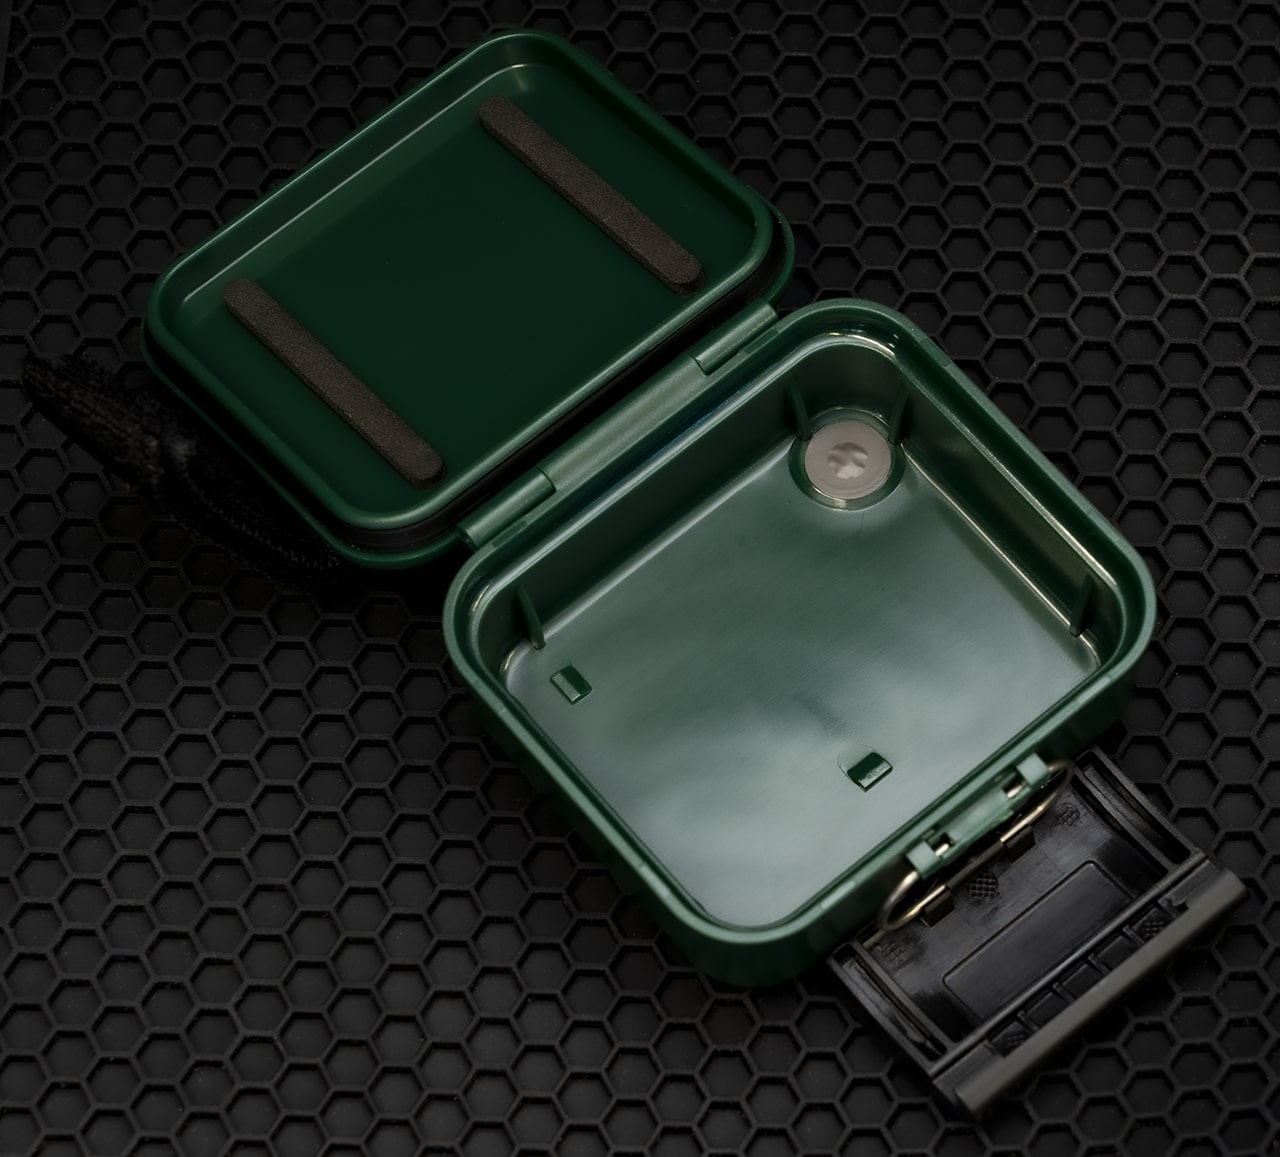 AudioMoth IPX7 Waterproof Case (Green)